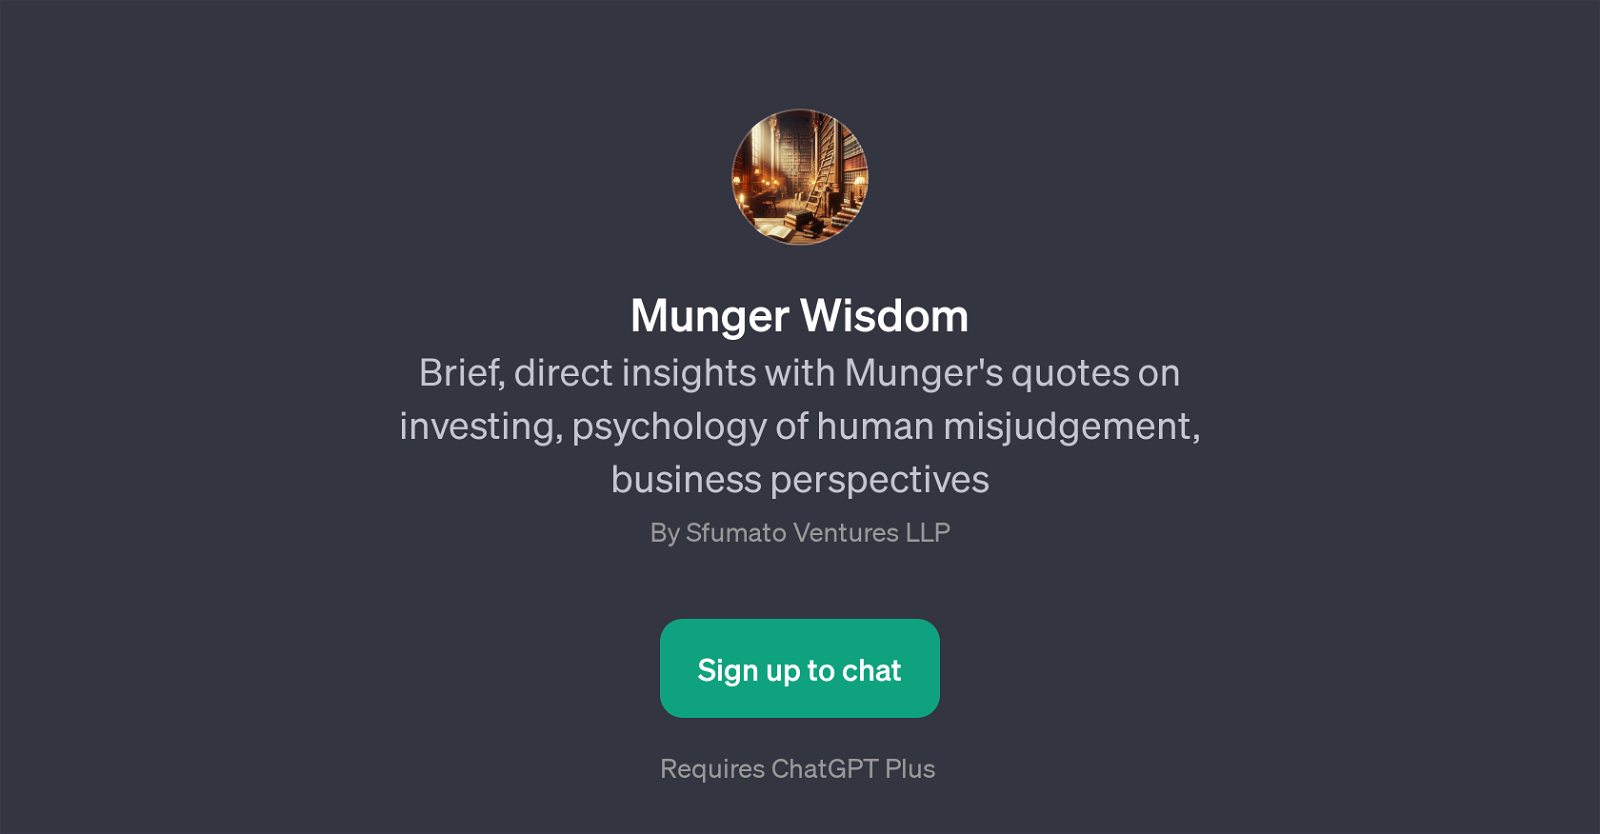 Munger Wisdom website